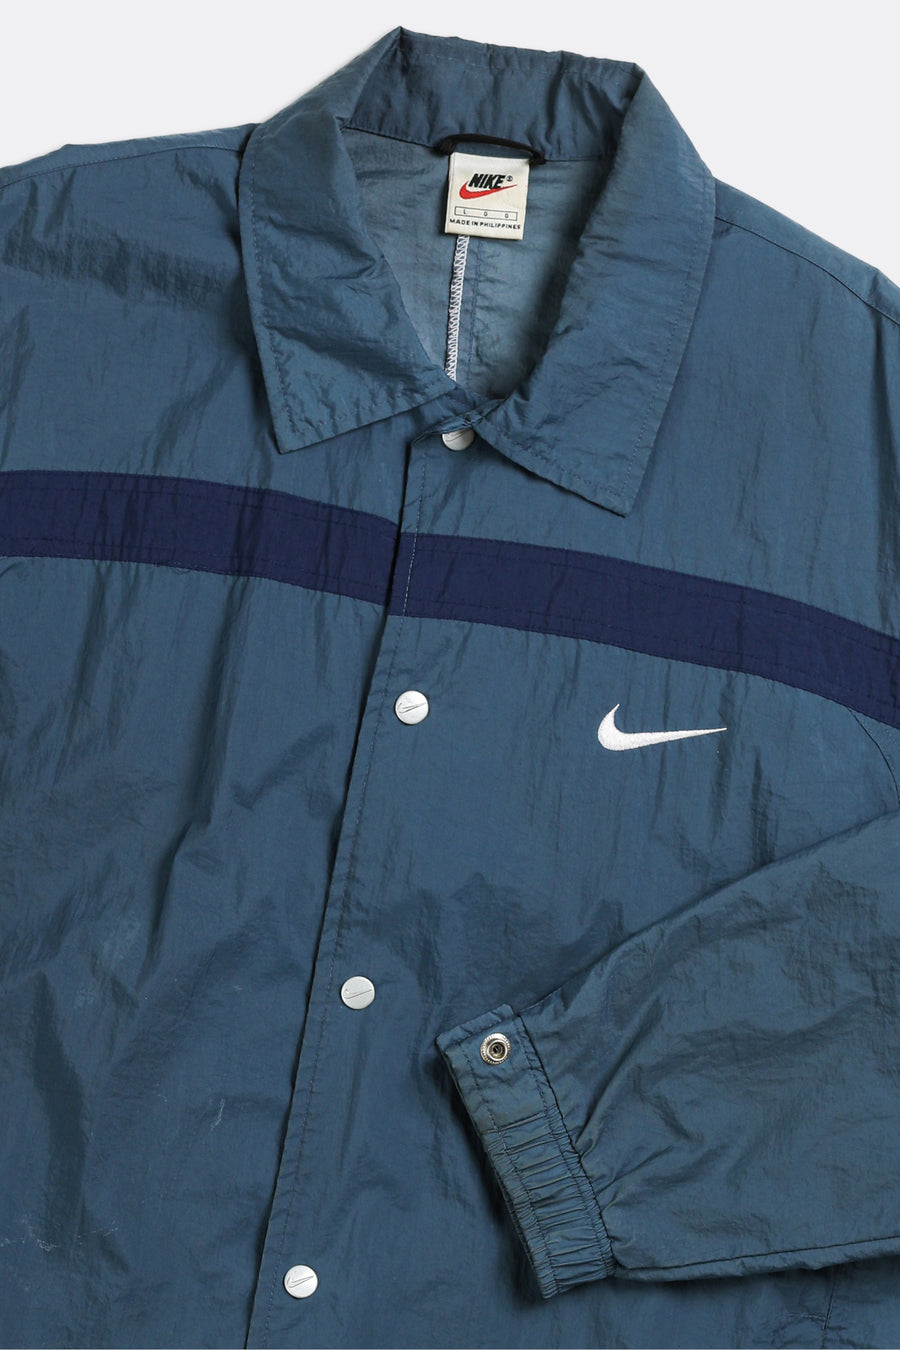 Vintage Nike Collared Windbreaker Jacket